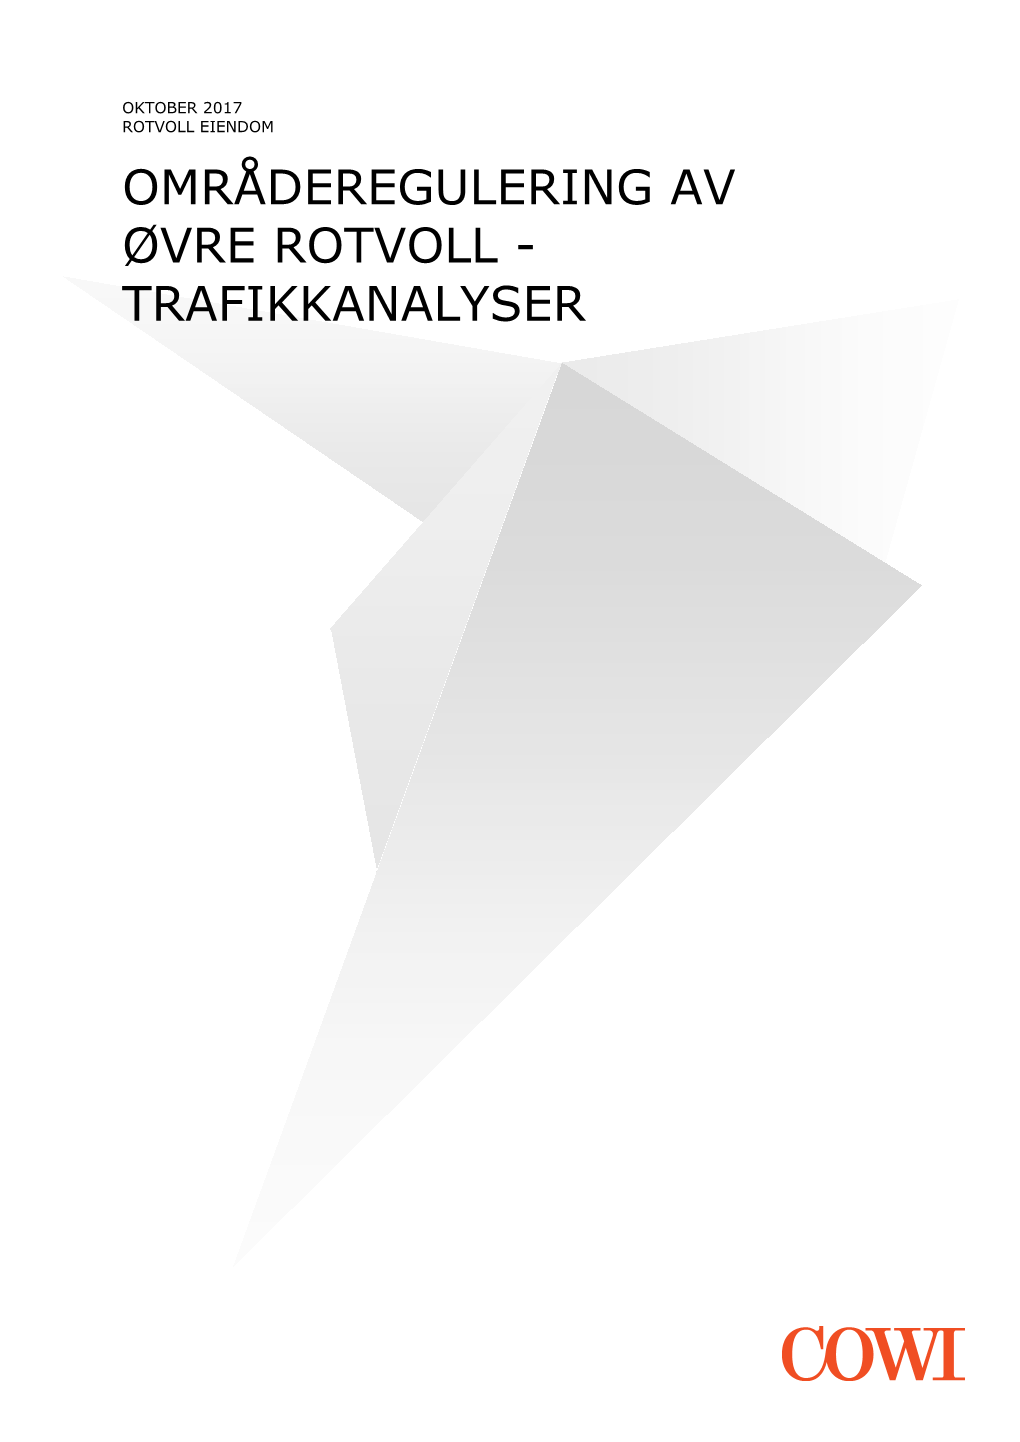 Områderegulering Av Øvre Rotvoll - Trafikkanalyser